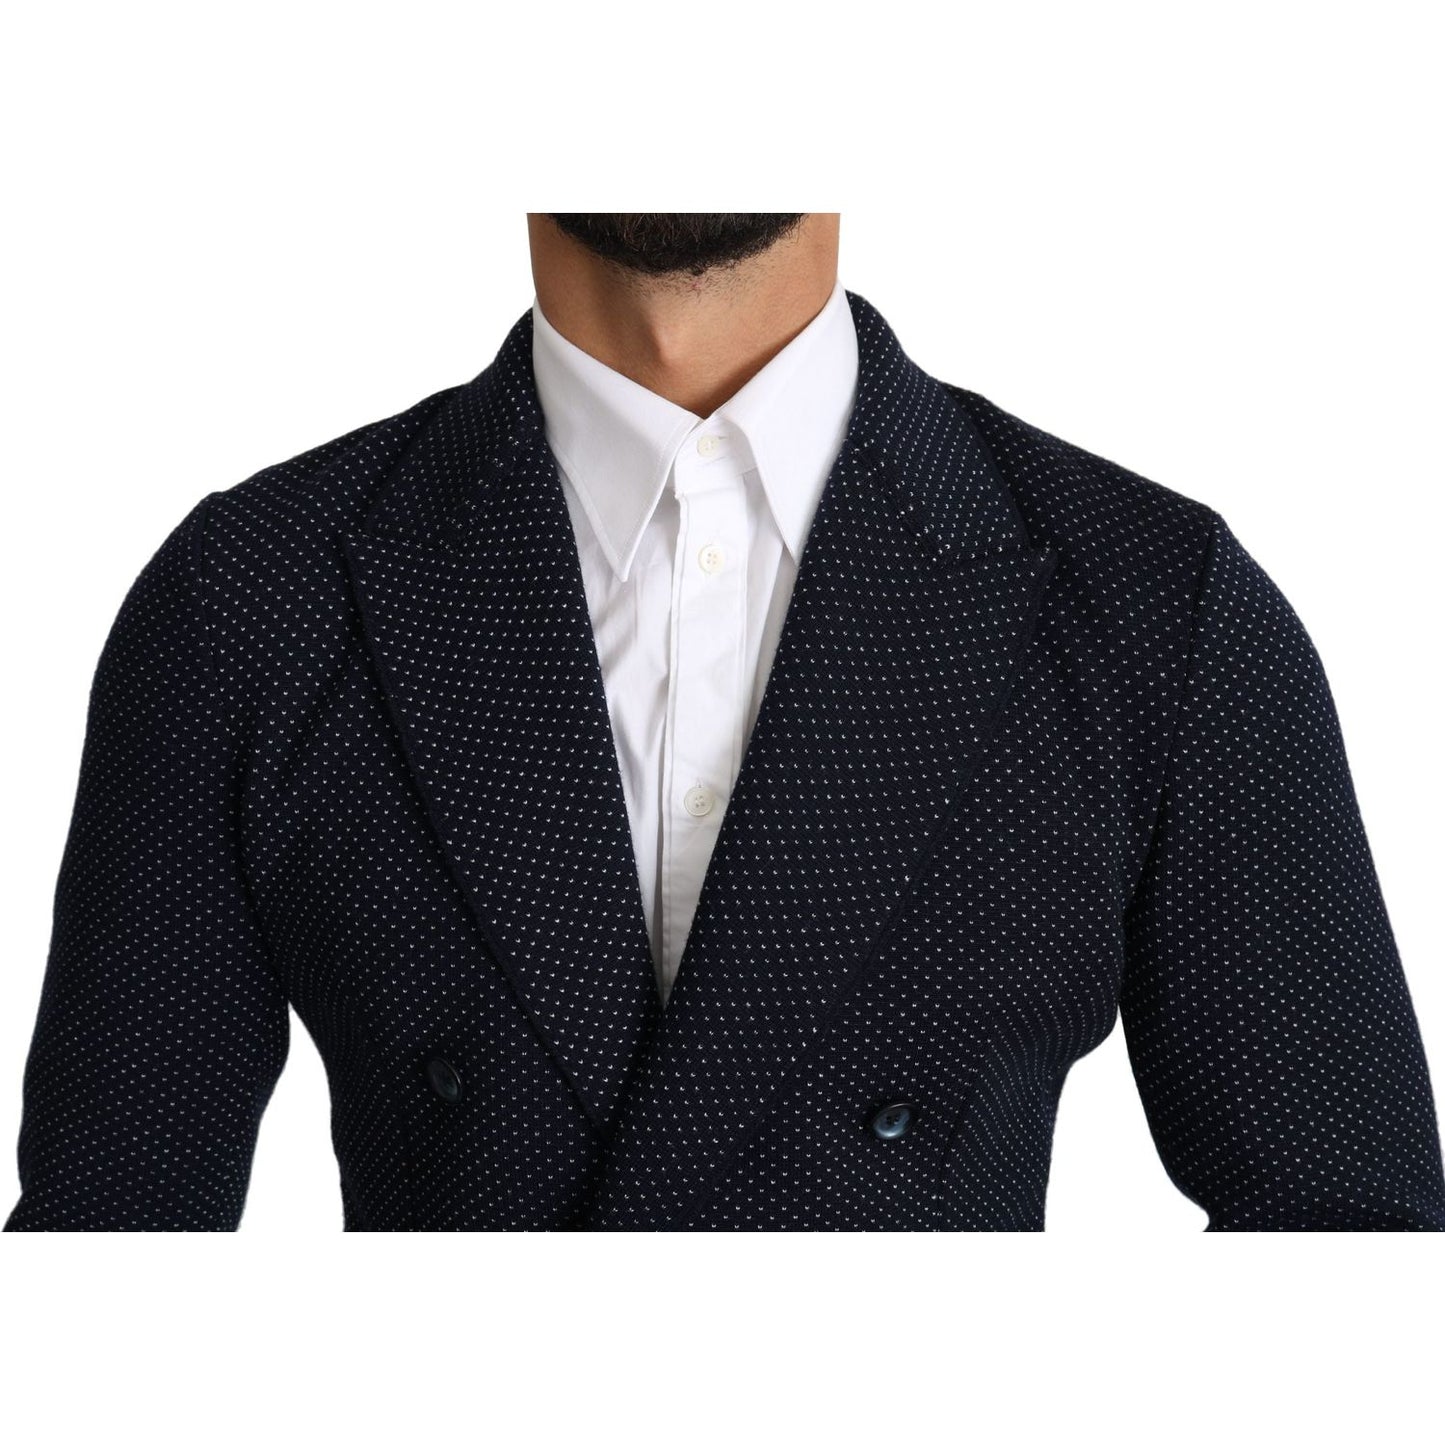 Dolce & Gabbana Elegant Dark Blue Dotted Slim-Fit Blazer dark-blue-dotted-double-breasted-coat-blazer IMG_0236-scaled-91ddd467-093.jpg